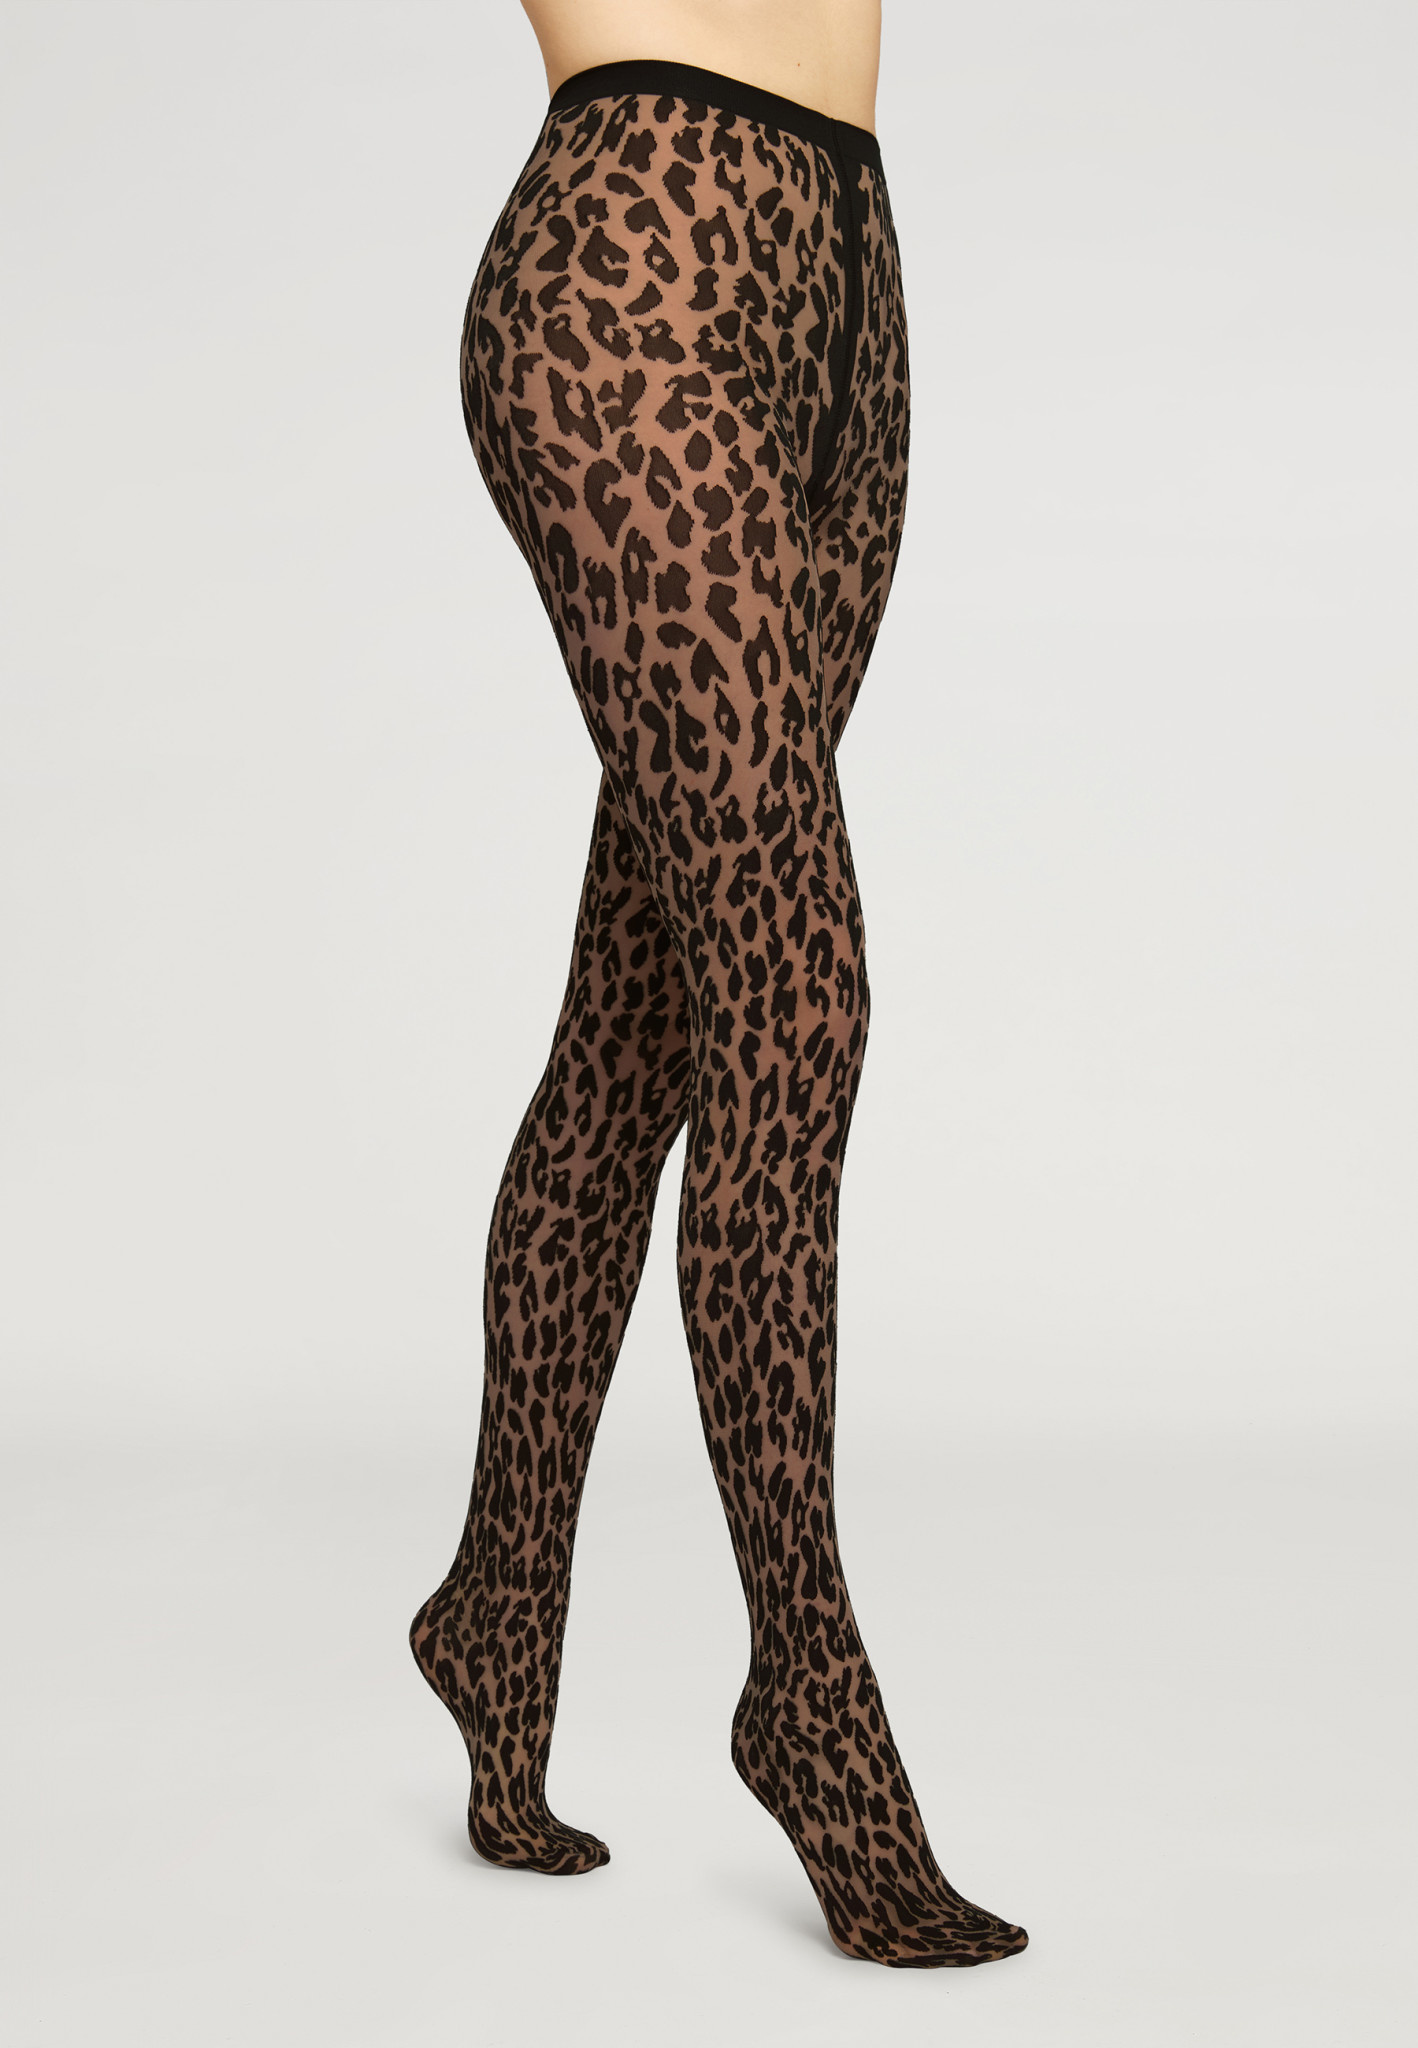 nsendm Women Tights Opening Leggings Leopard Print Pantihose